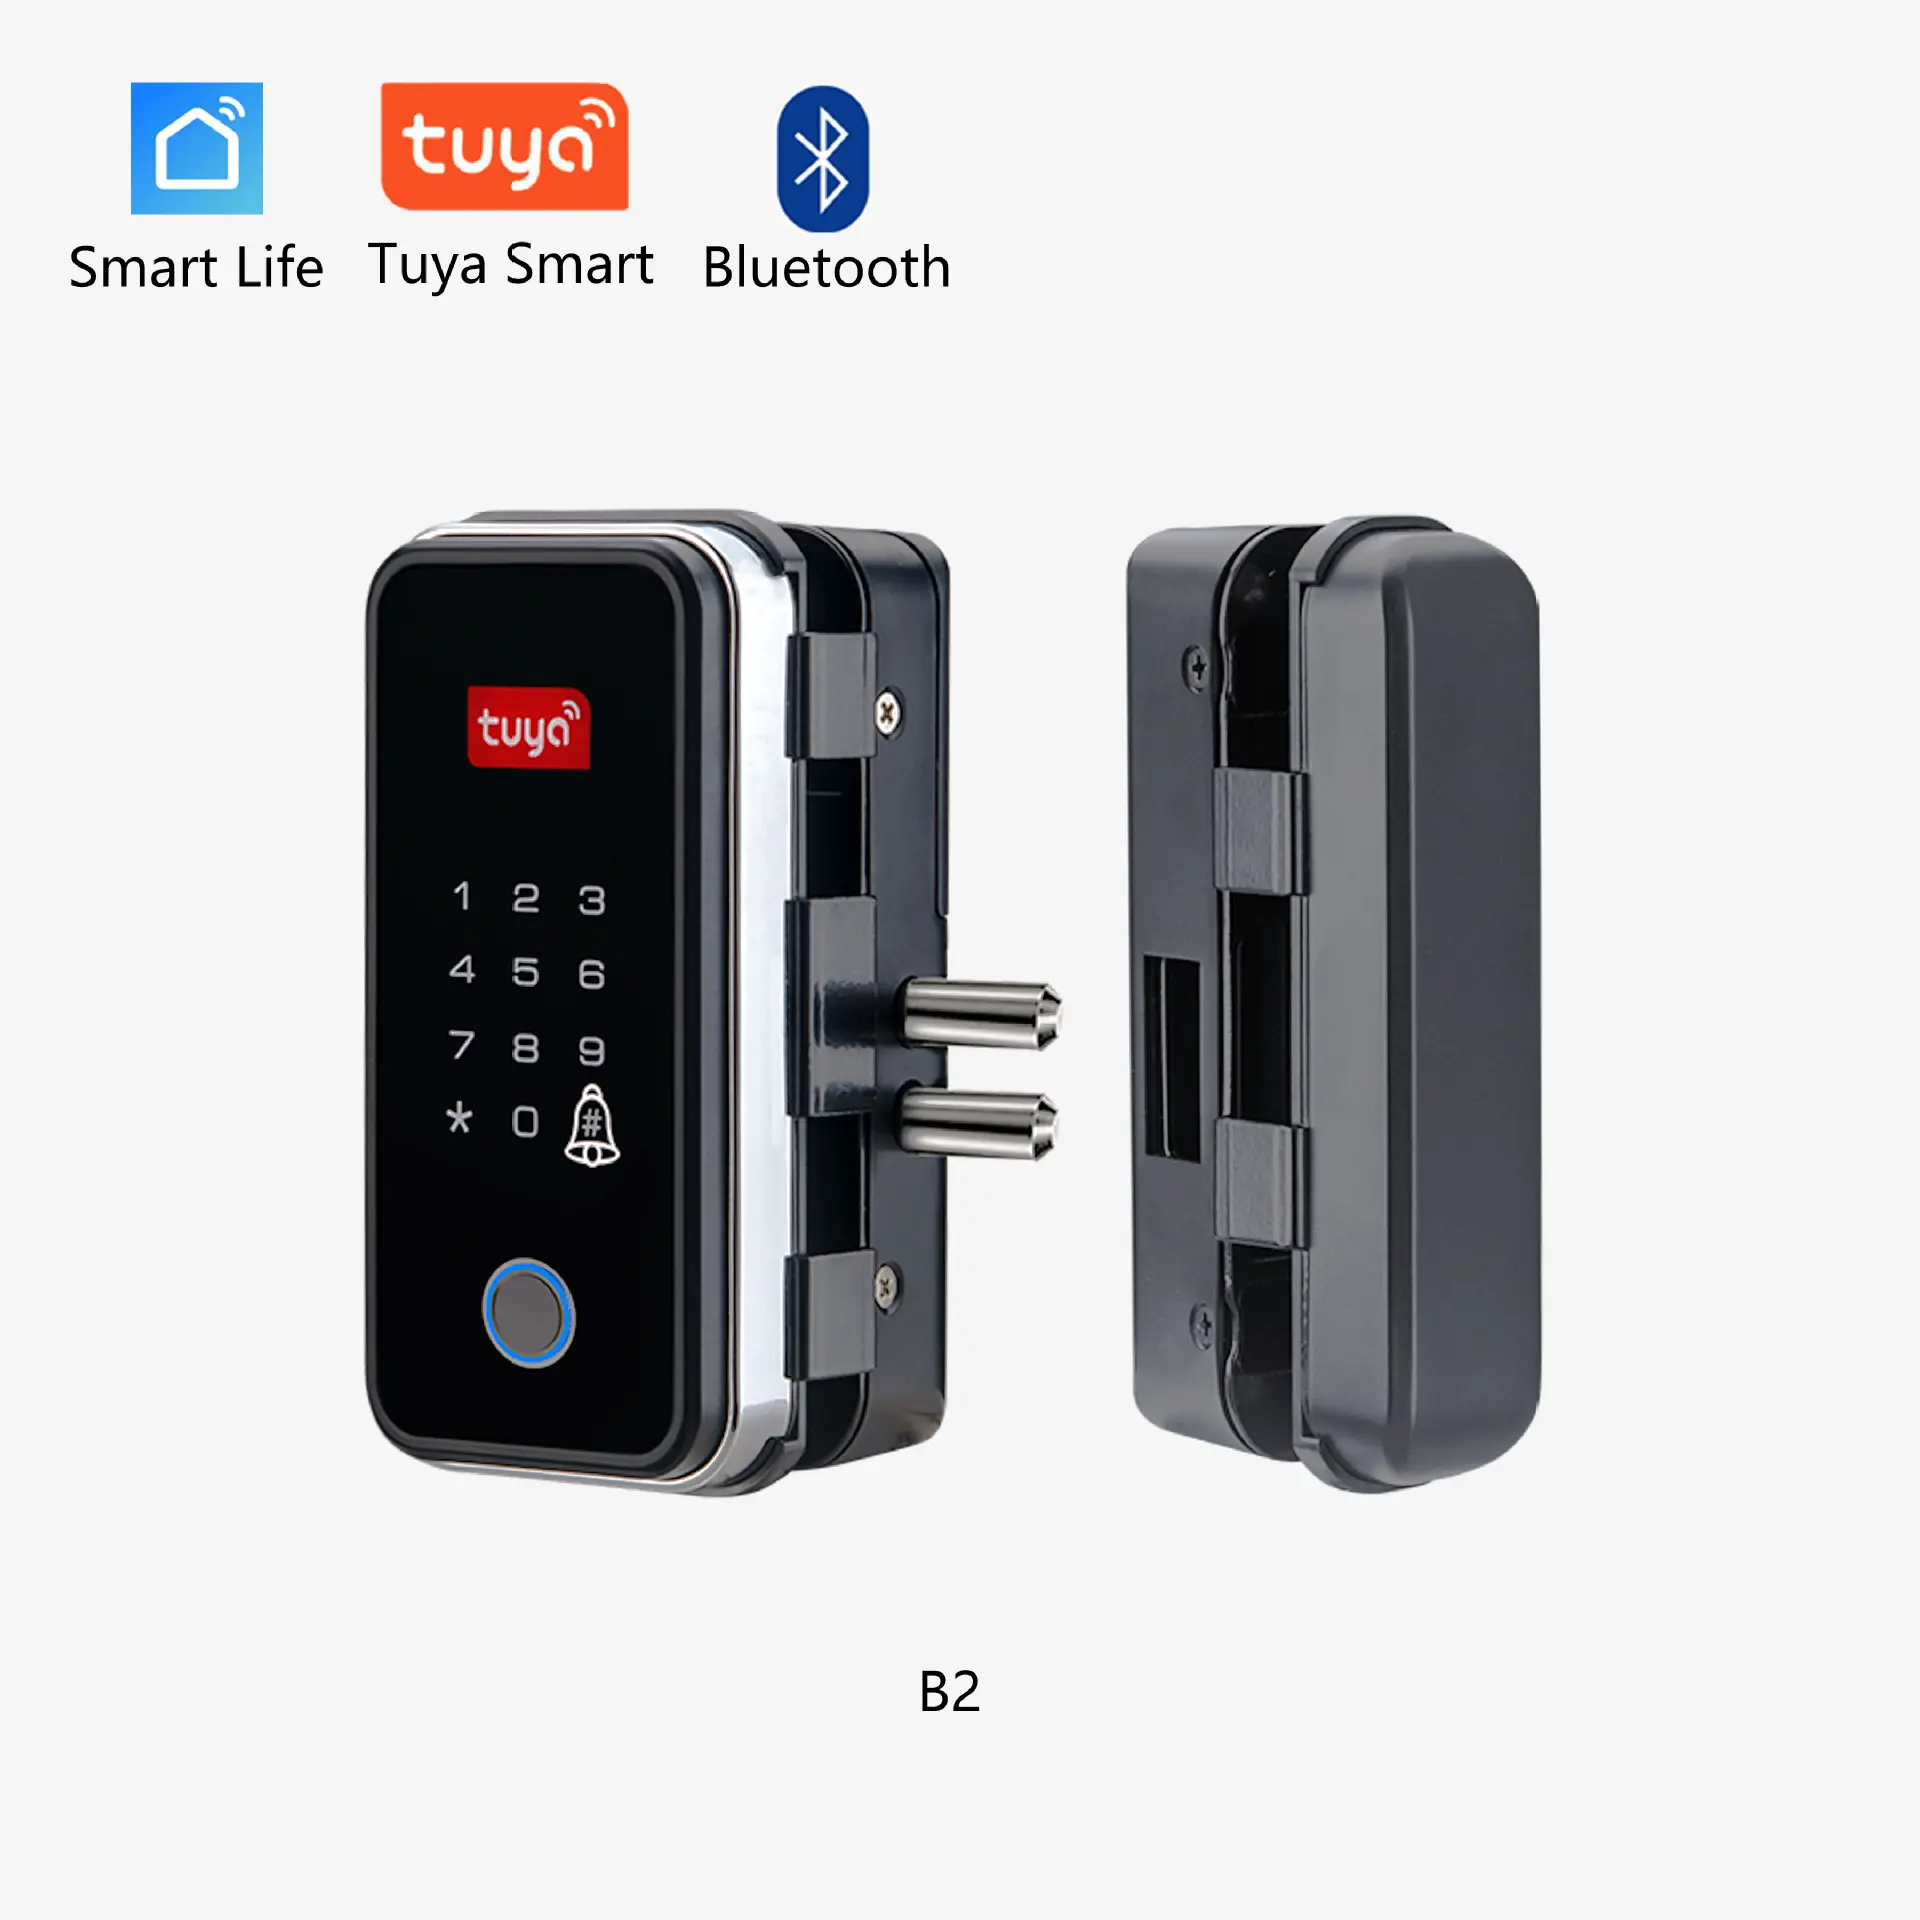 JBLYU Tuya kunci pintu cerdas, kunci pintu kaca Blu sidik jari pintar dengan kontrol aplikasi